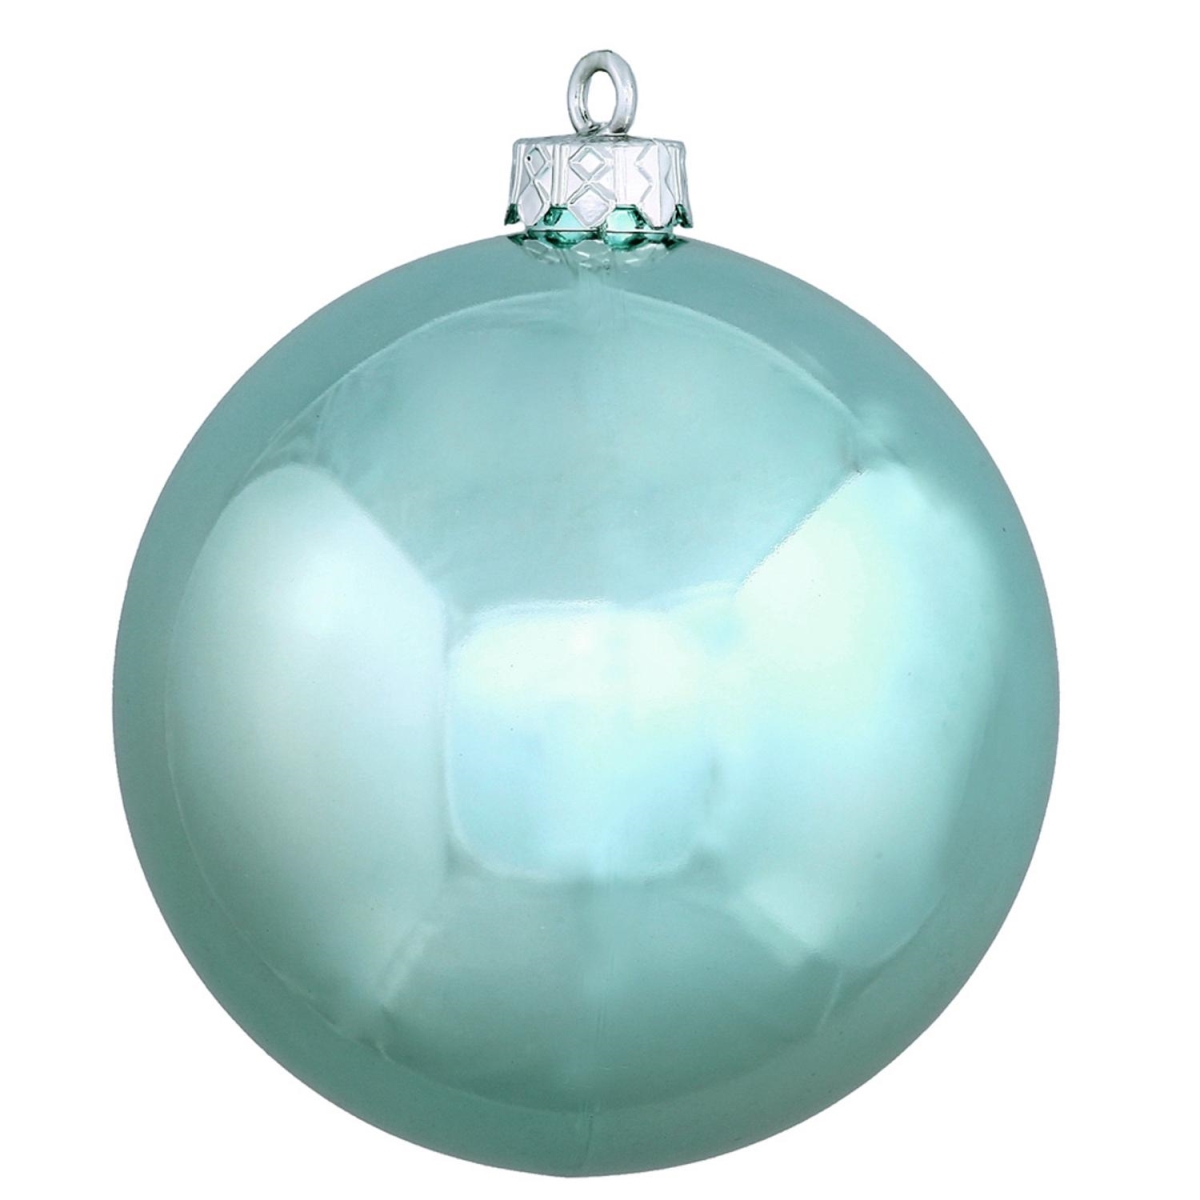 Northlight 31755759 4 in. Shatterproof UV Resistant Commercial Christmas Ball Ornament, Shiny & Mermaid Blue